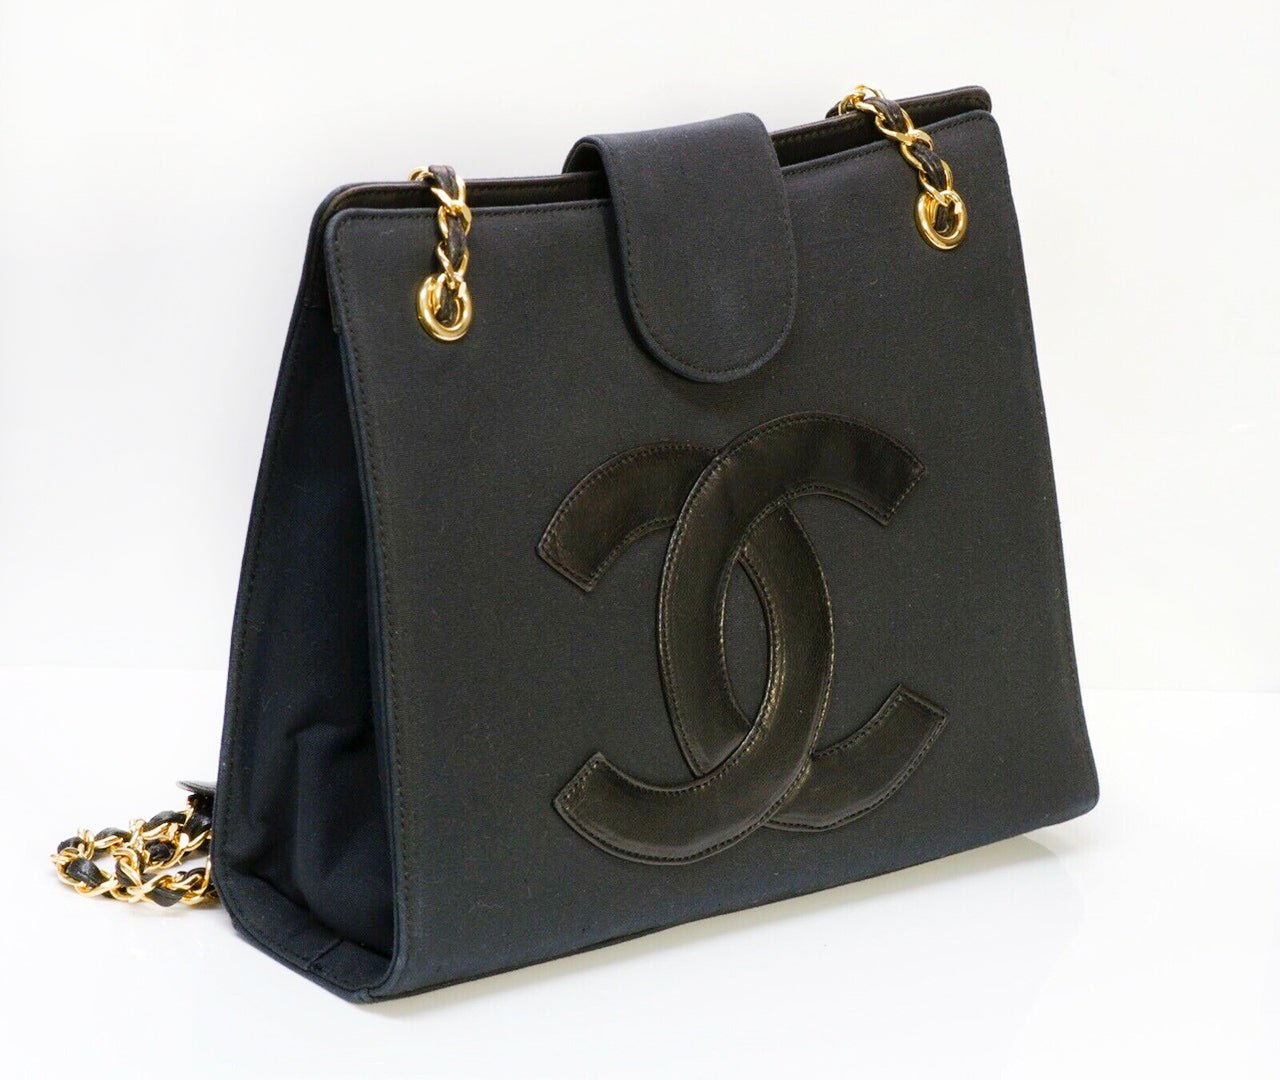 Vintage CHANEL CC Black Fabric Leather Chain Shoulder Bag